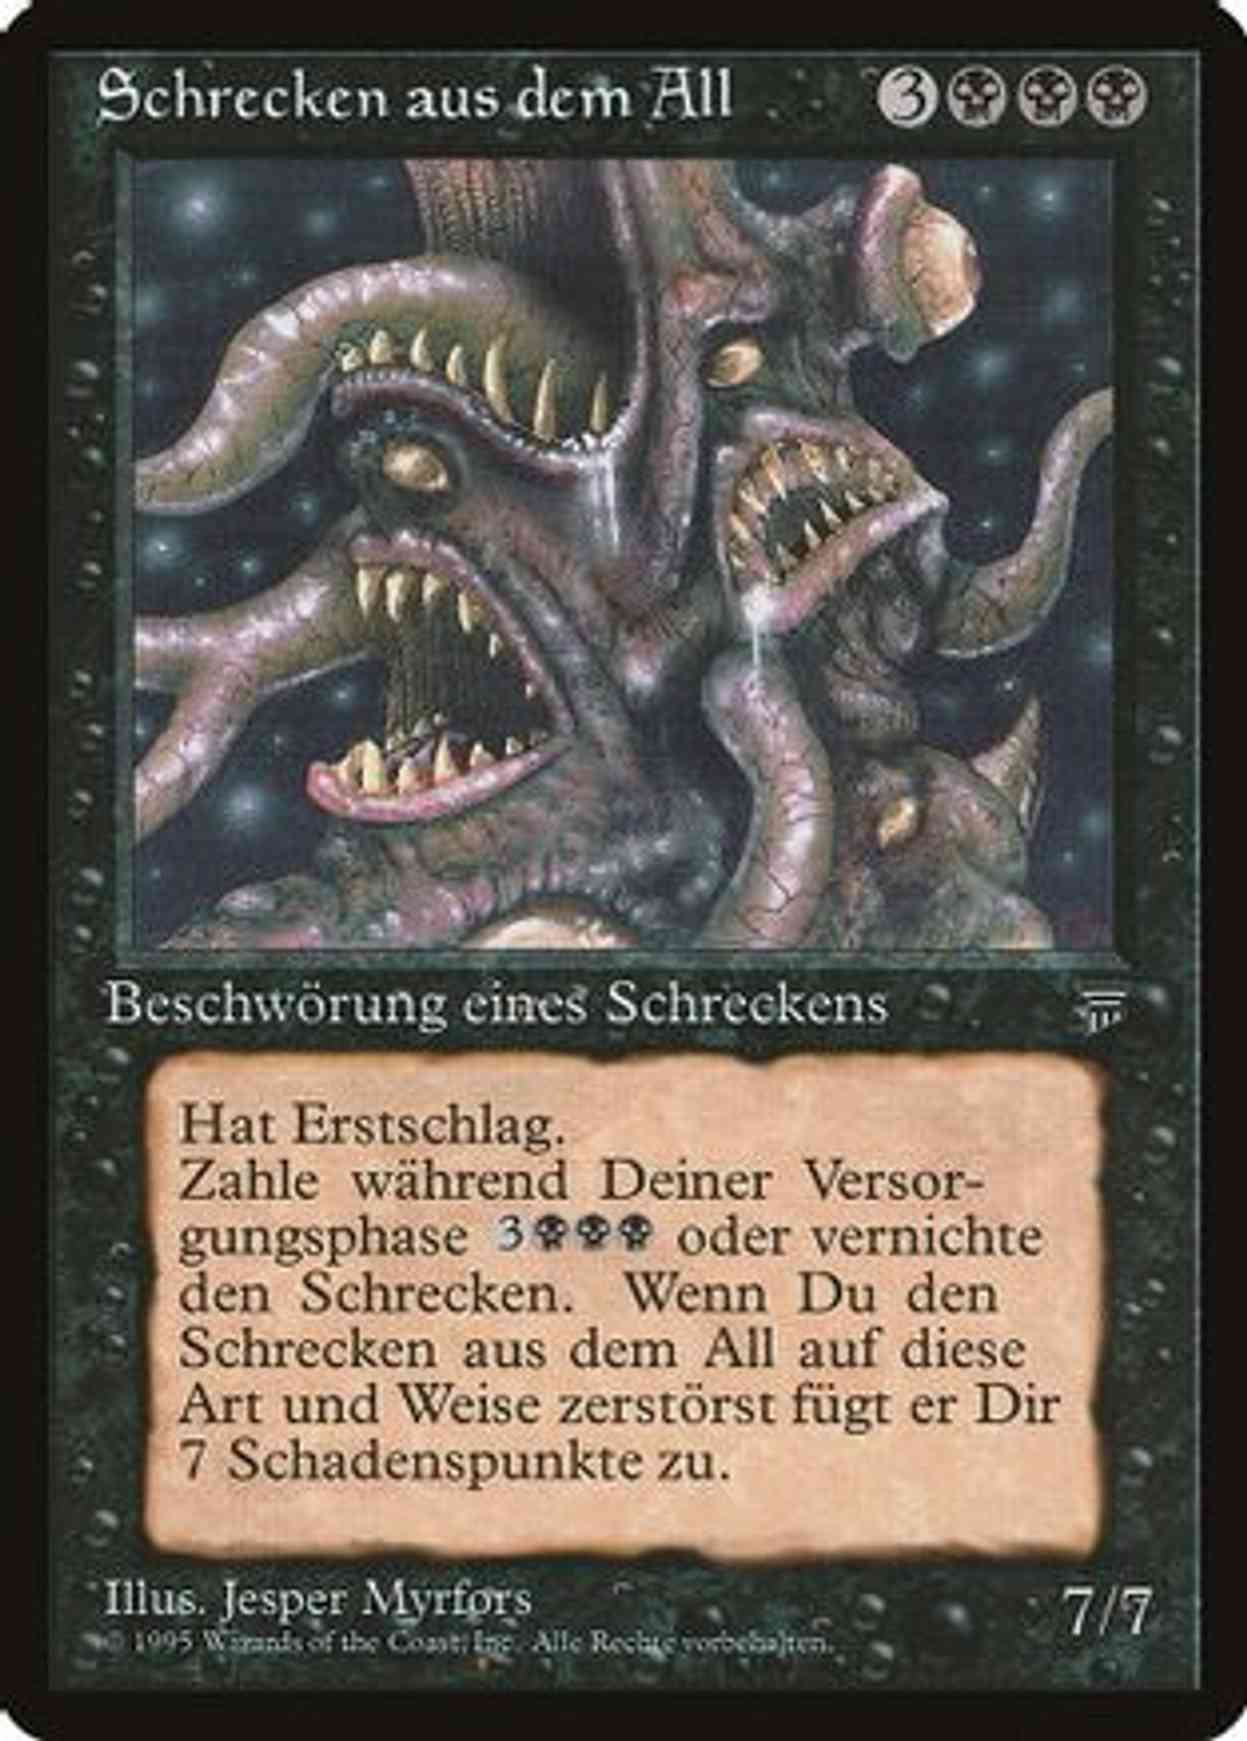 Cosmic Horror (German) - "Schrecken aus dem All" magic card front